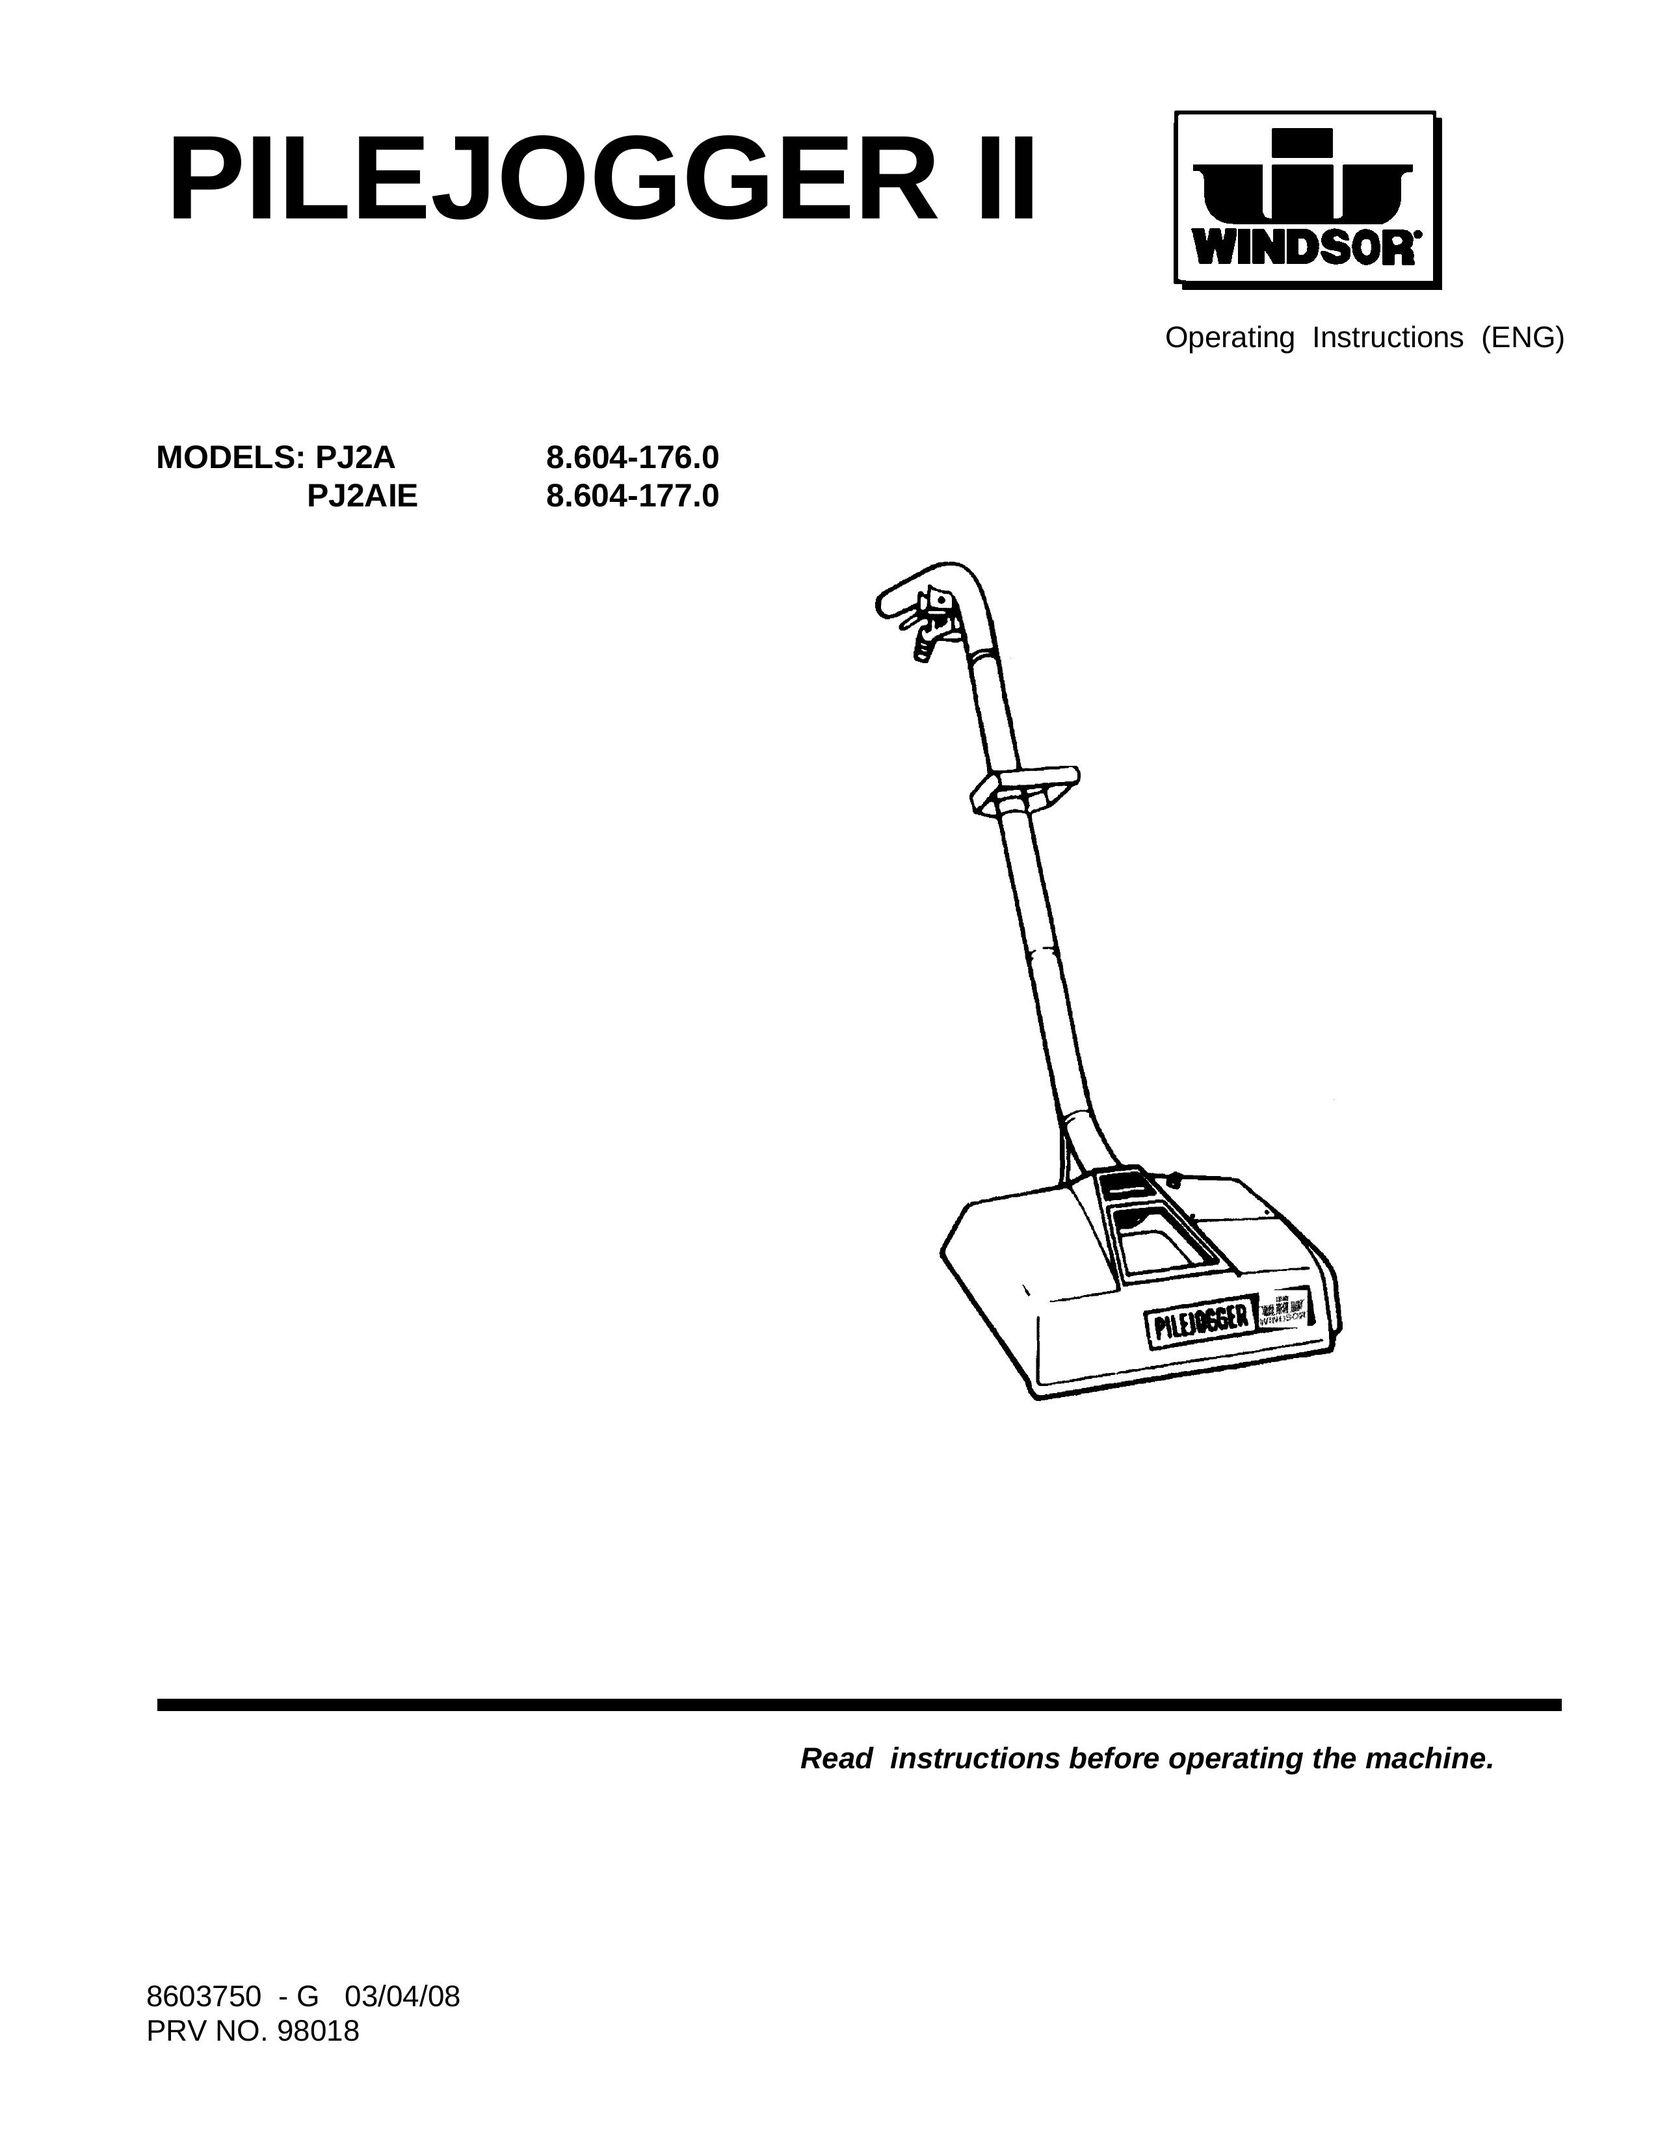 Windsor PJ2AIE Stroller User Manual